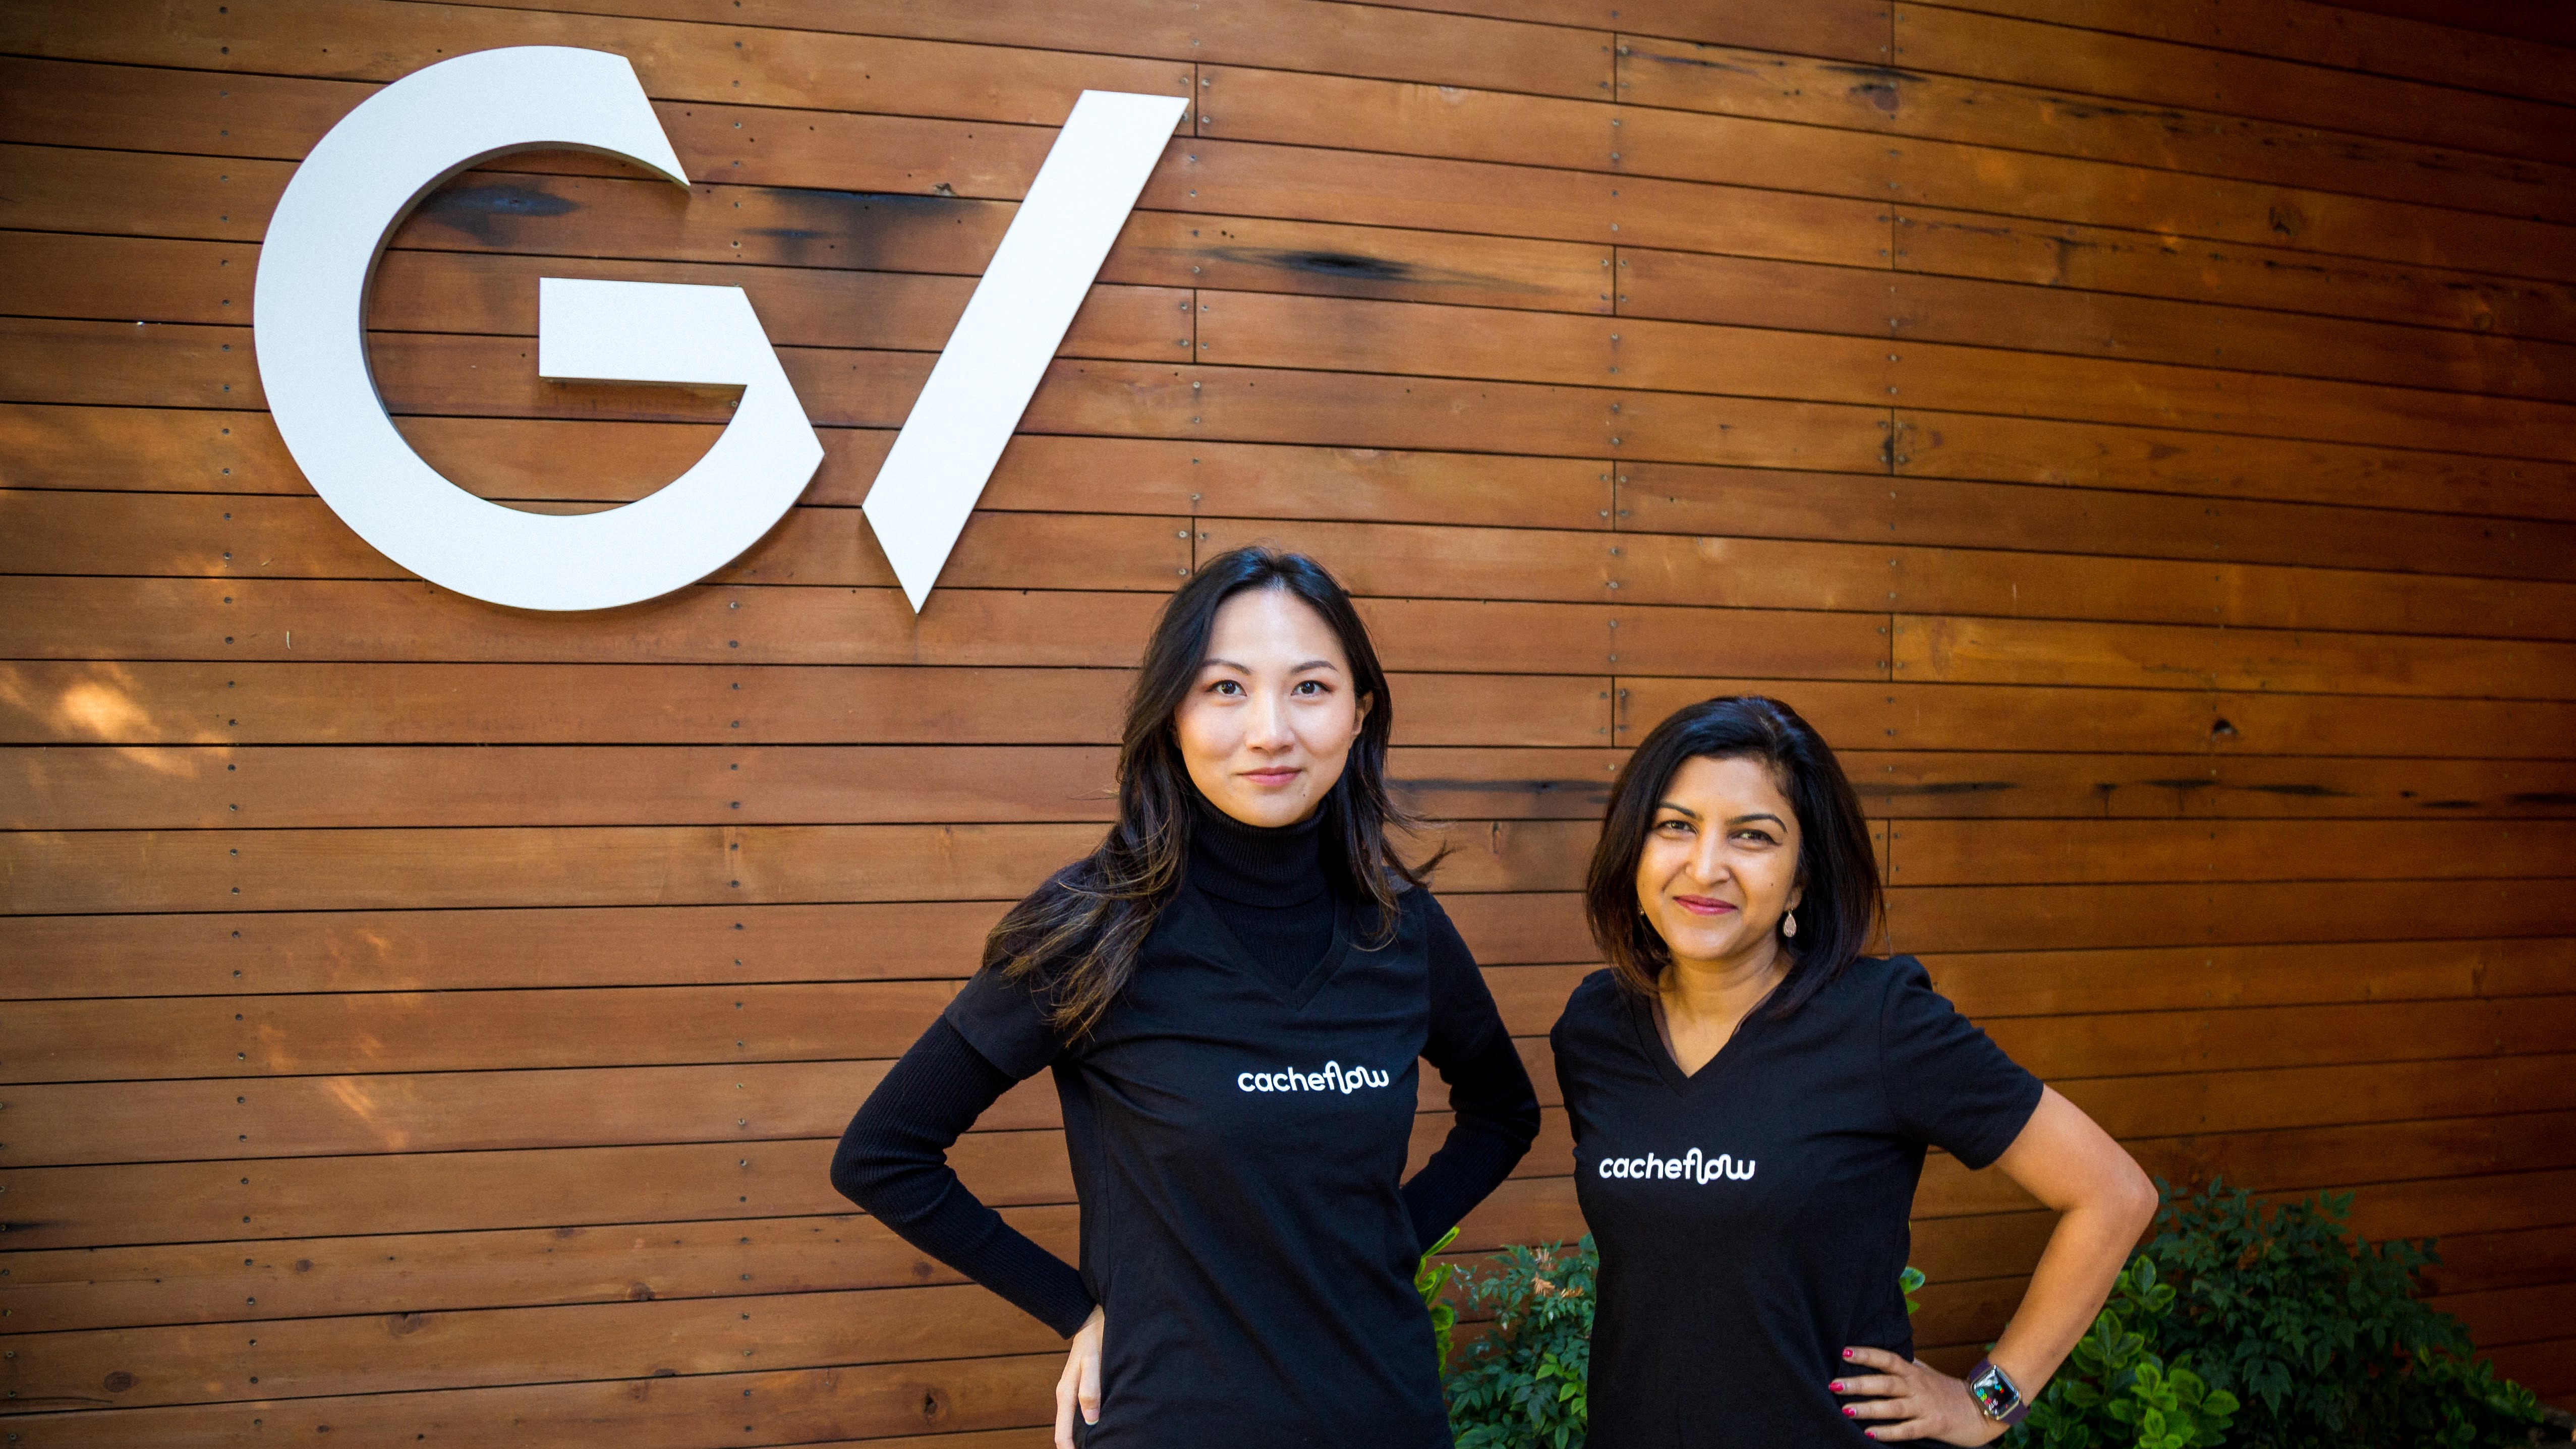 GV Partner Crystal Huang with Cacheflow CEO and co-founder Sarika Garg